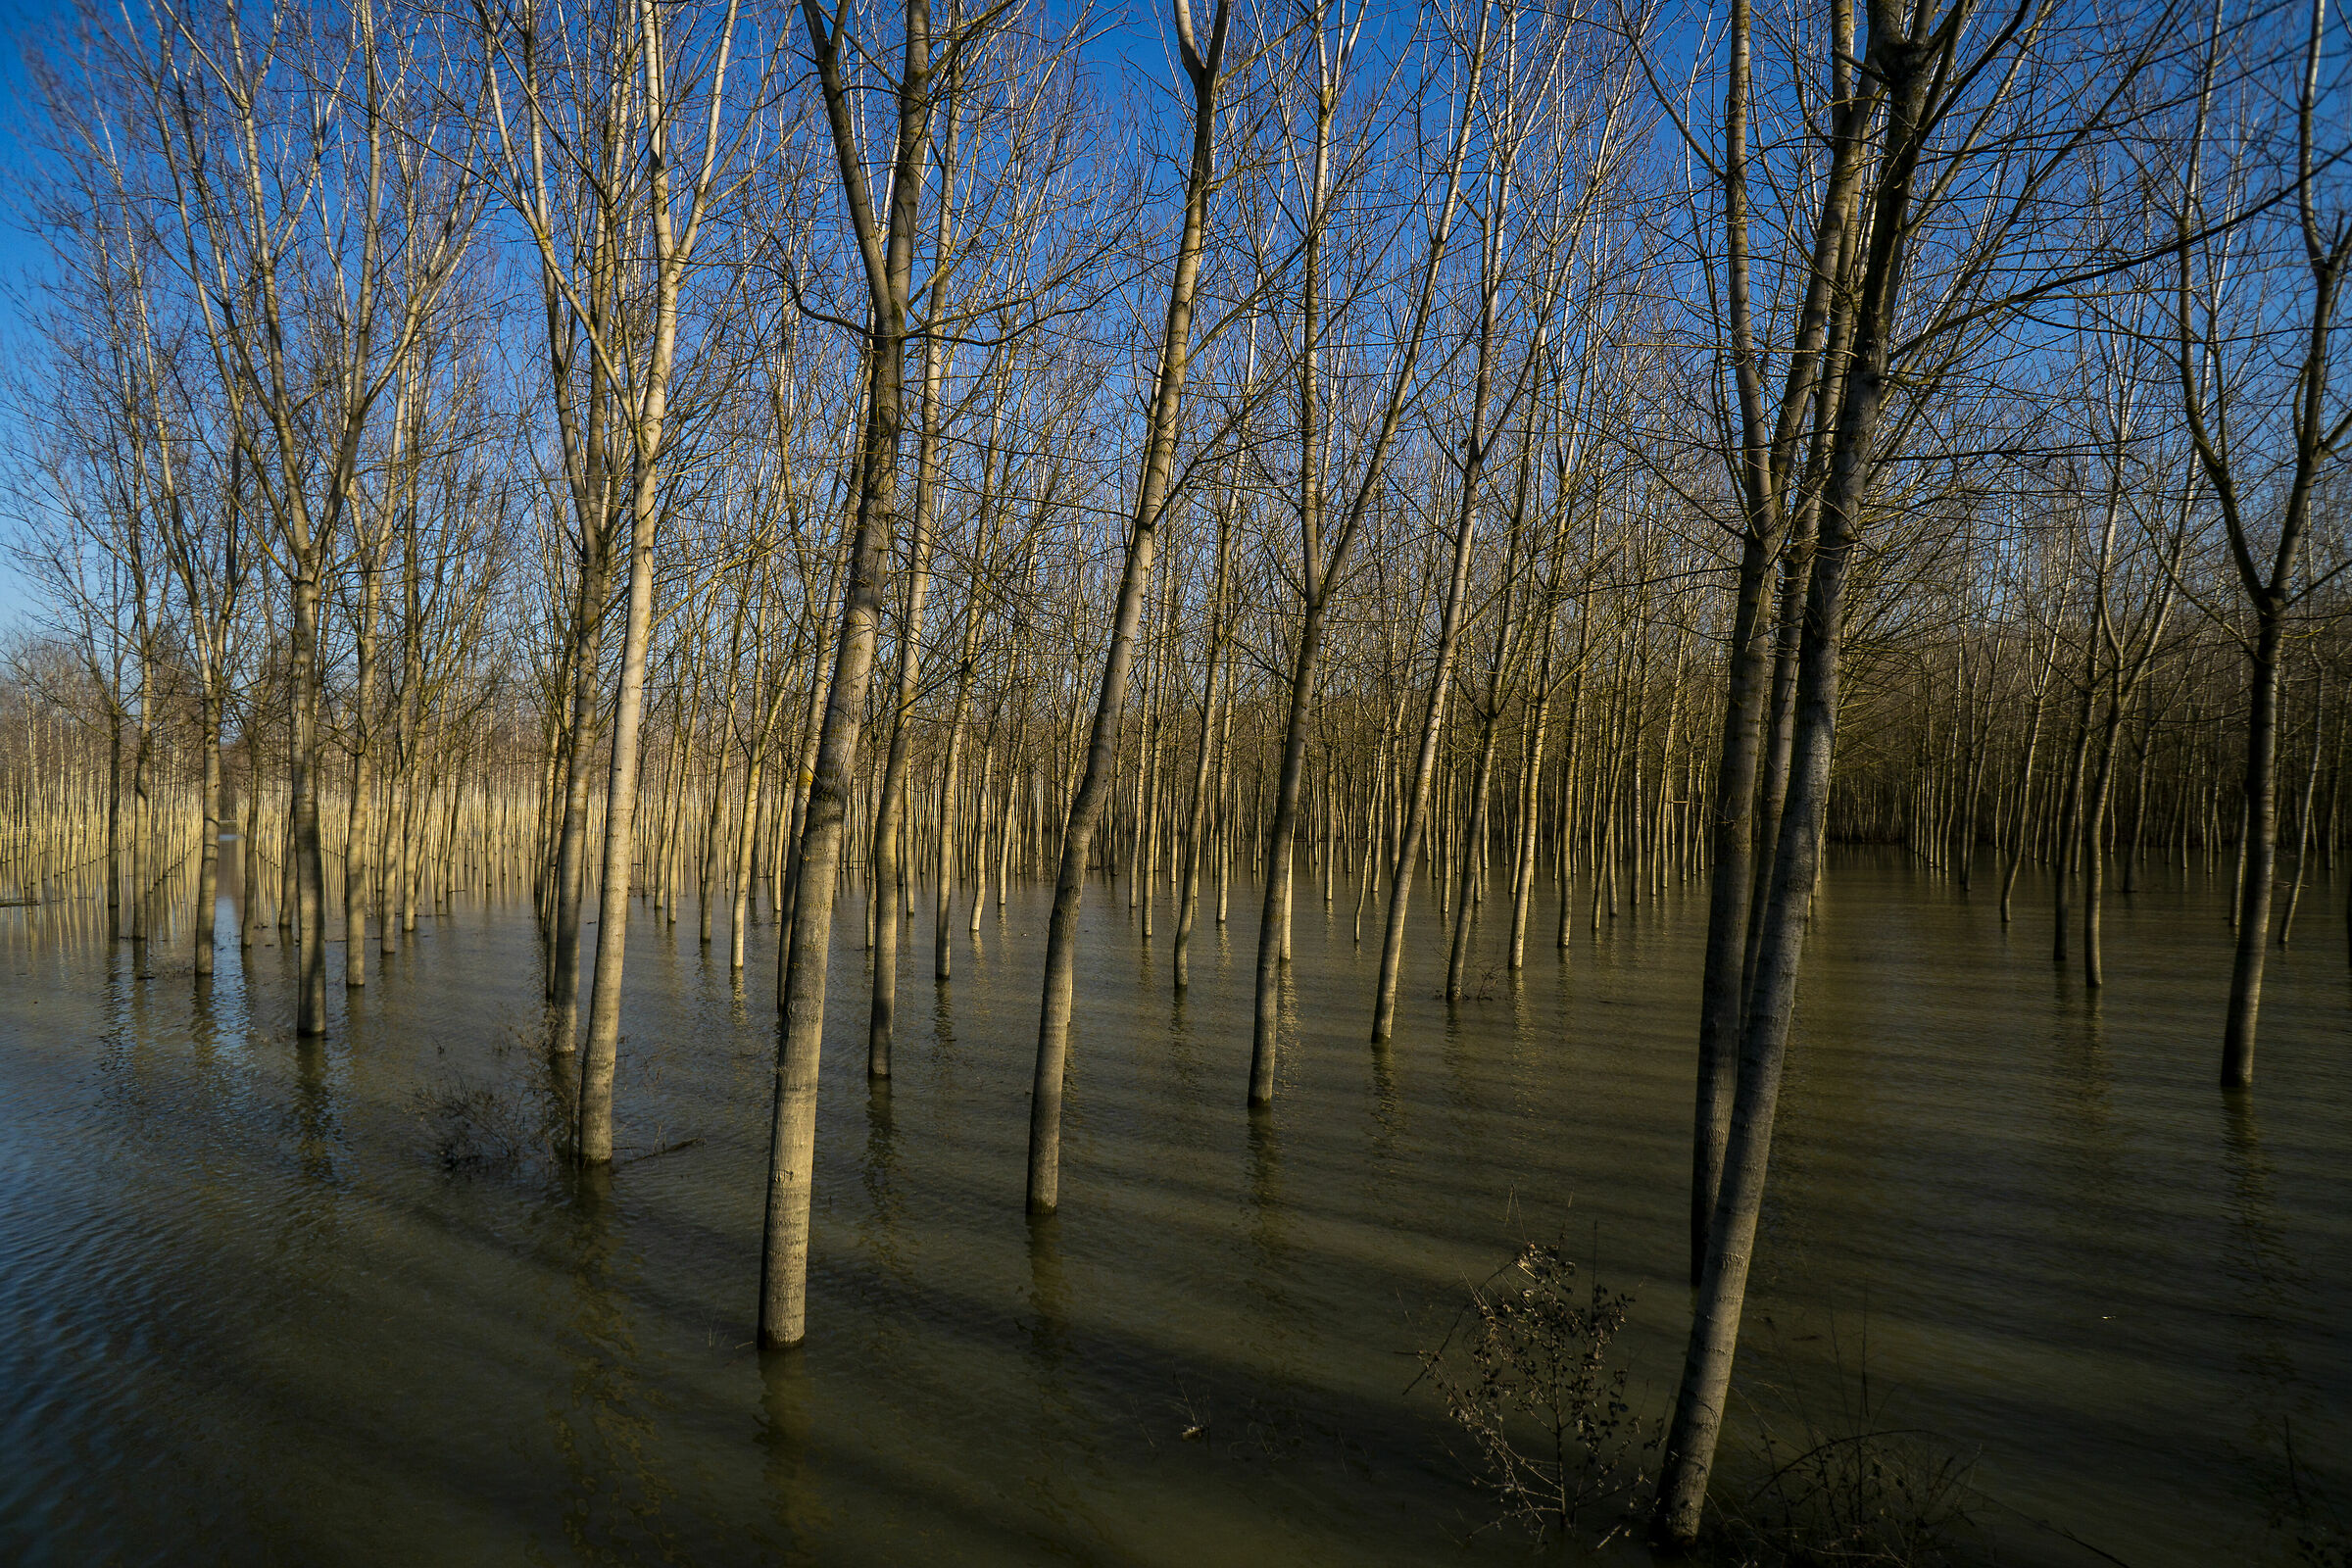 The flood of the Oglio...